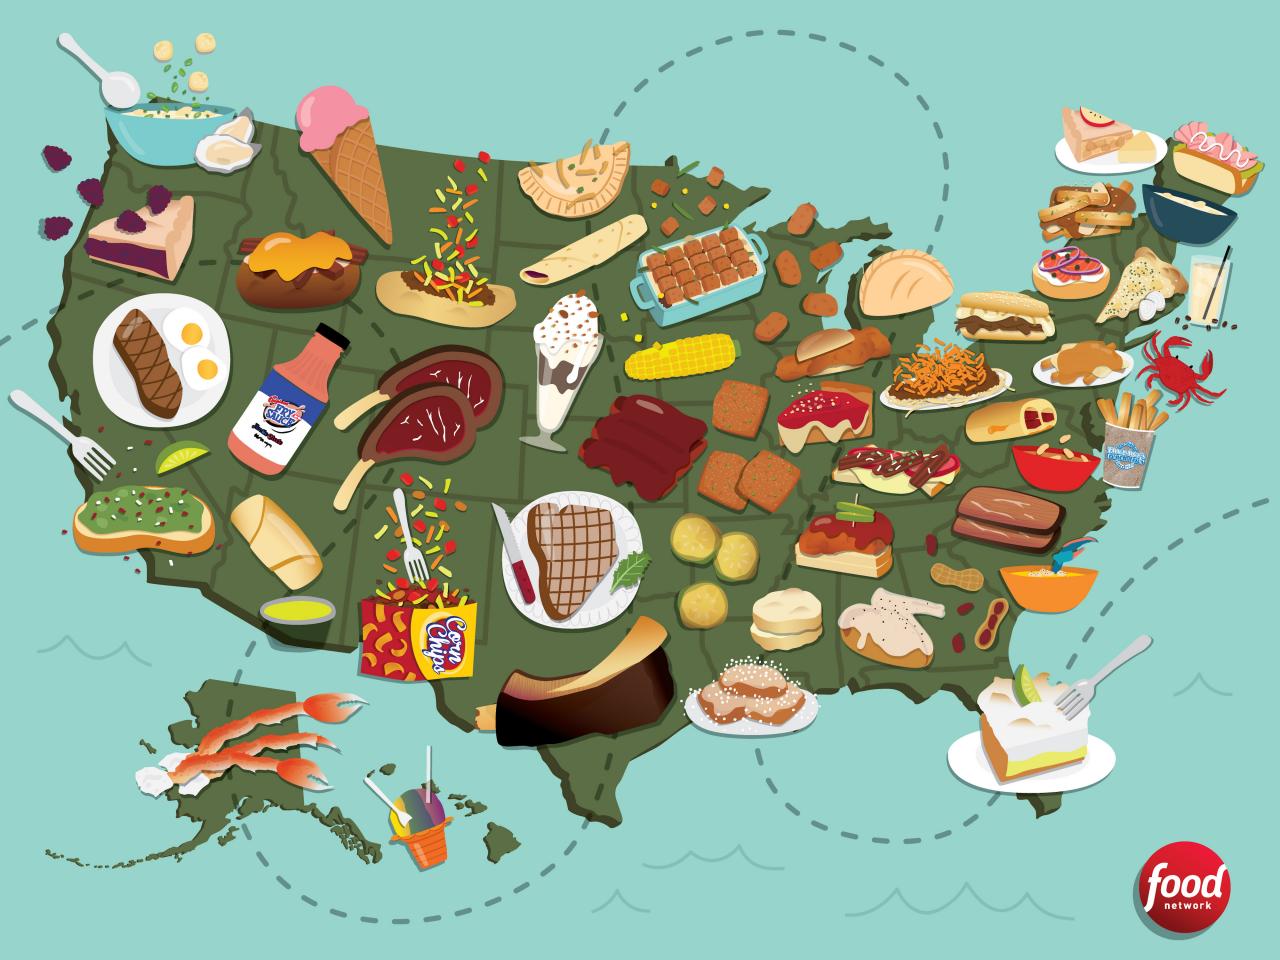 Country differences. Американская еда. Еда США рисунки. Американские плакаты еда. Острова приключений США еда.